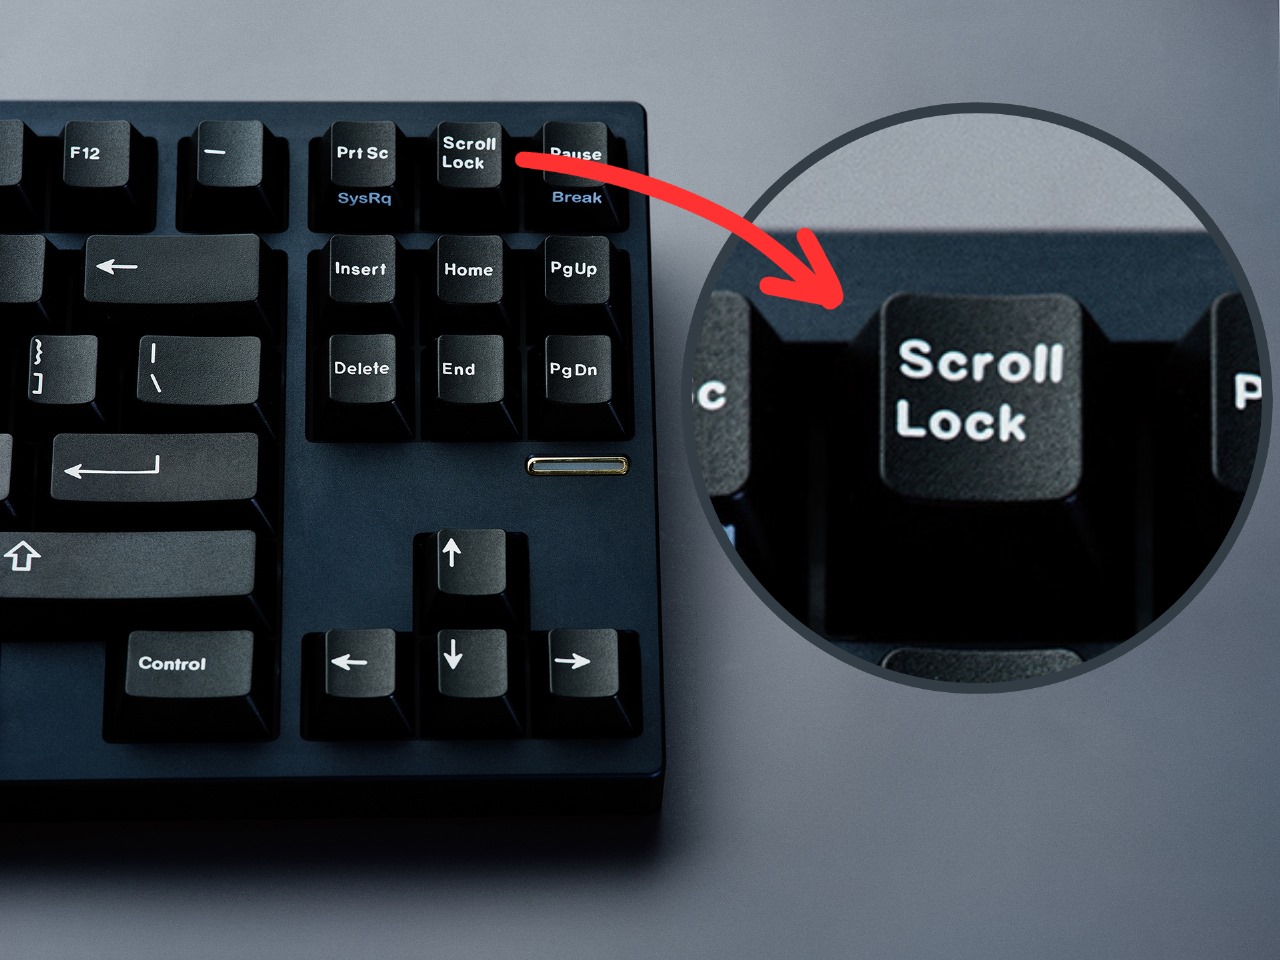 Scroll Lock key on the Keyboard